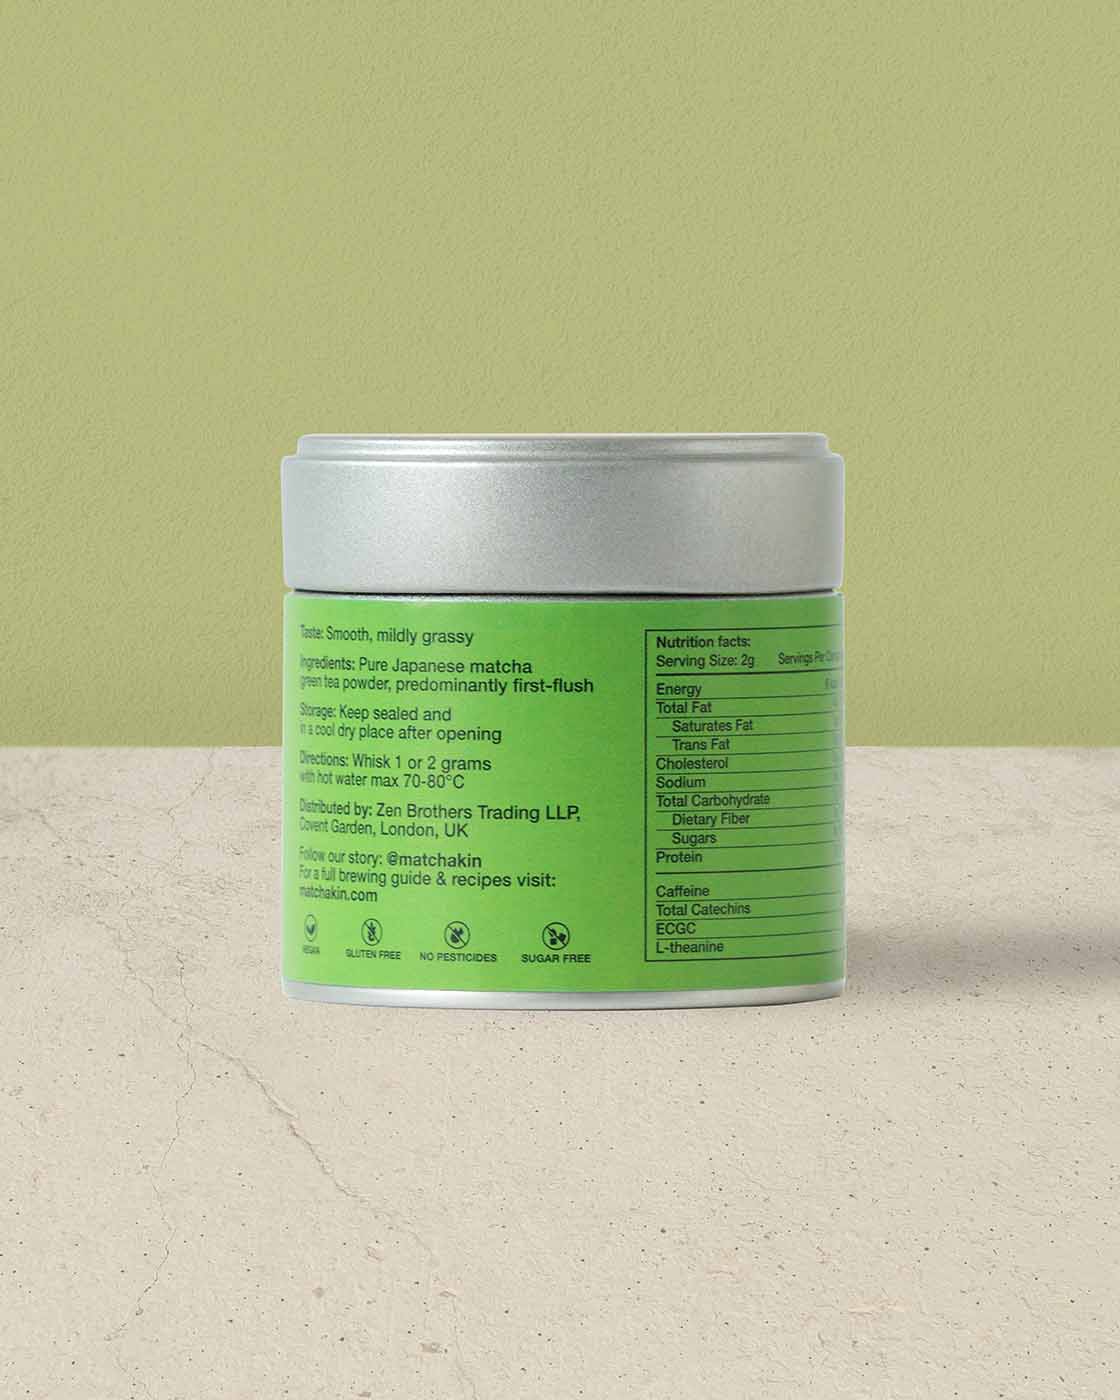 Matchakin Organic Eco Ceremonial Matcha green tea powder made in Japan, 30 grams in tins 